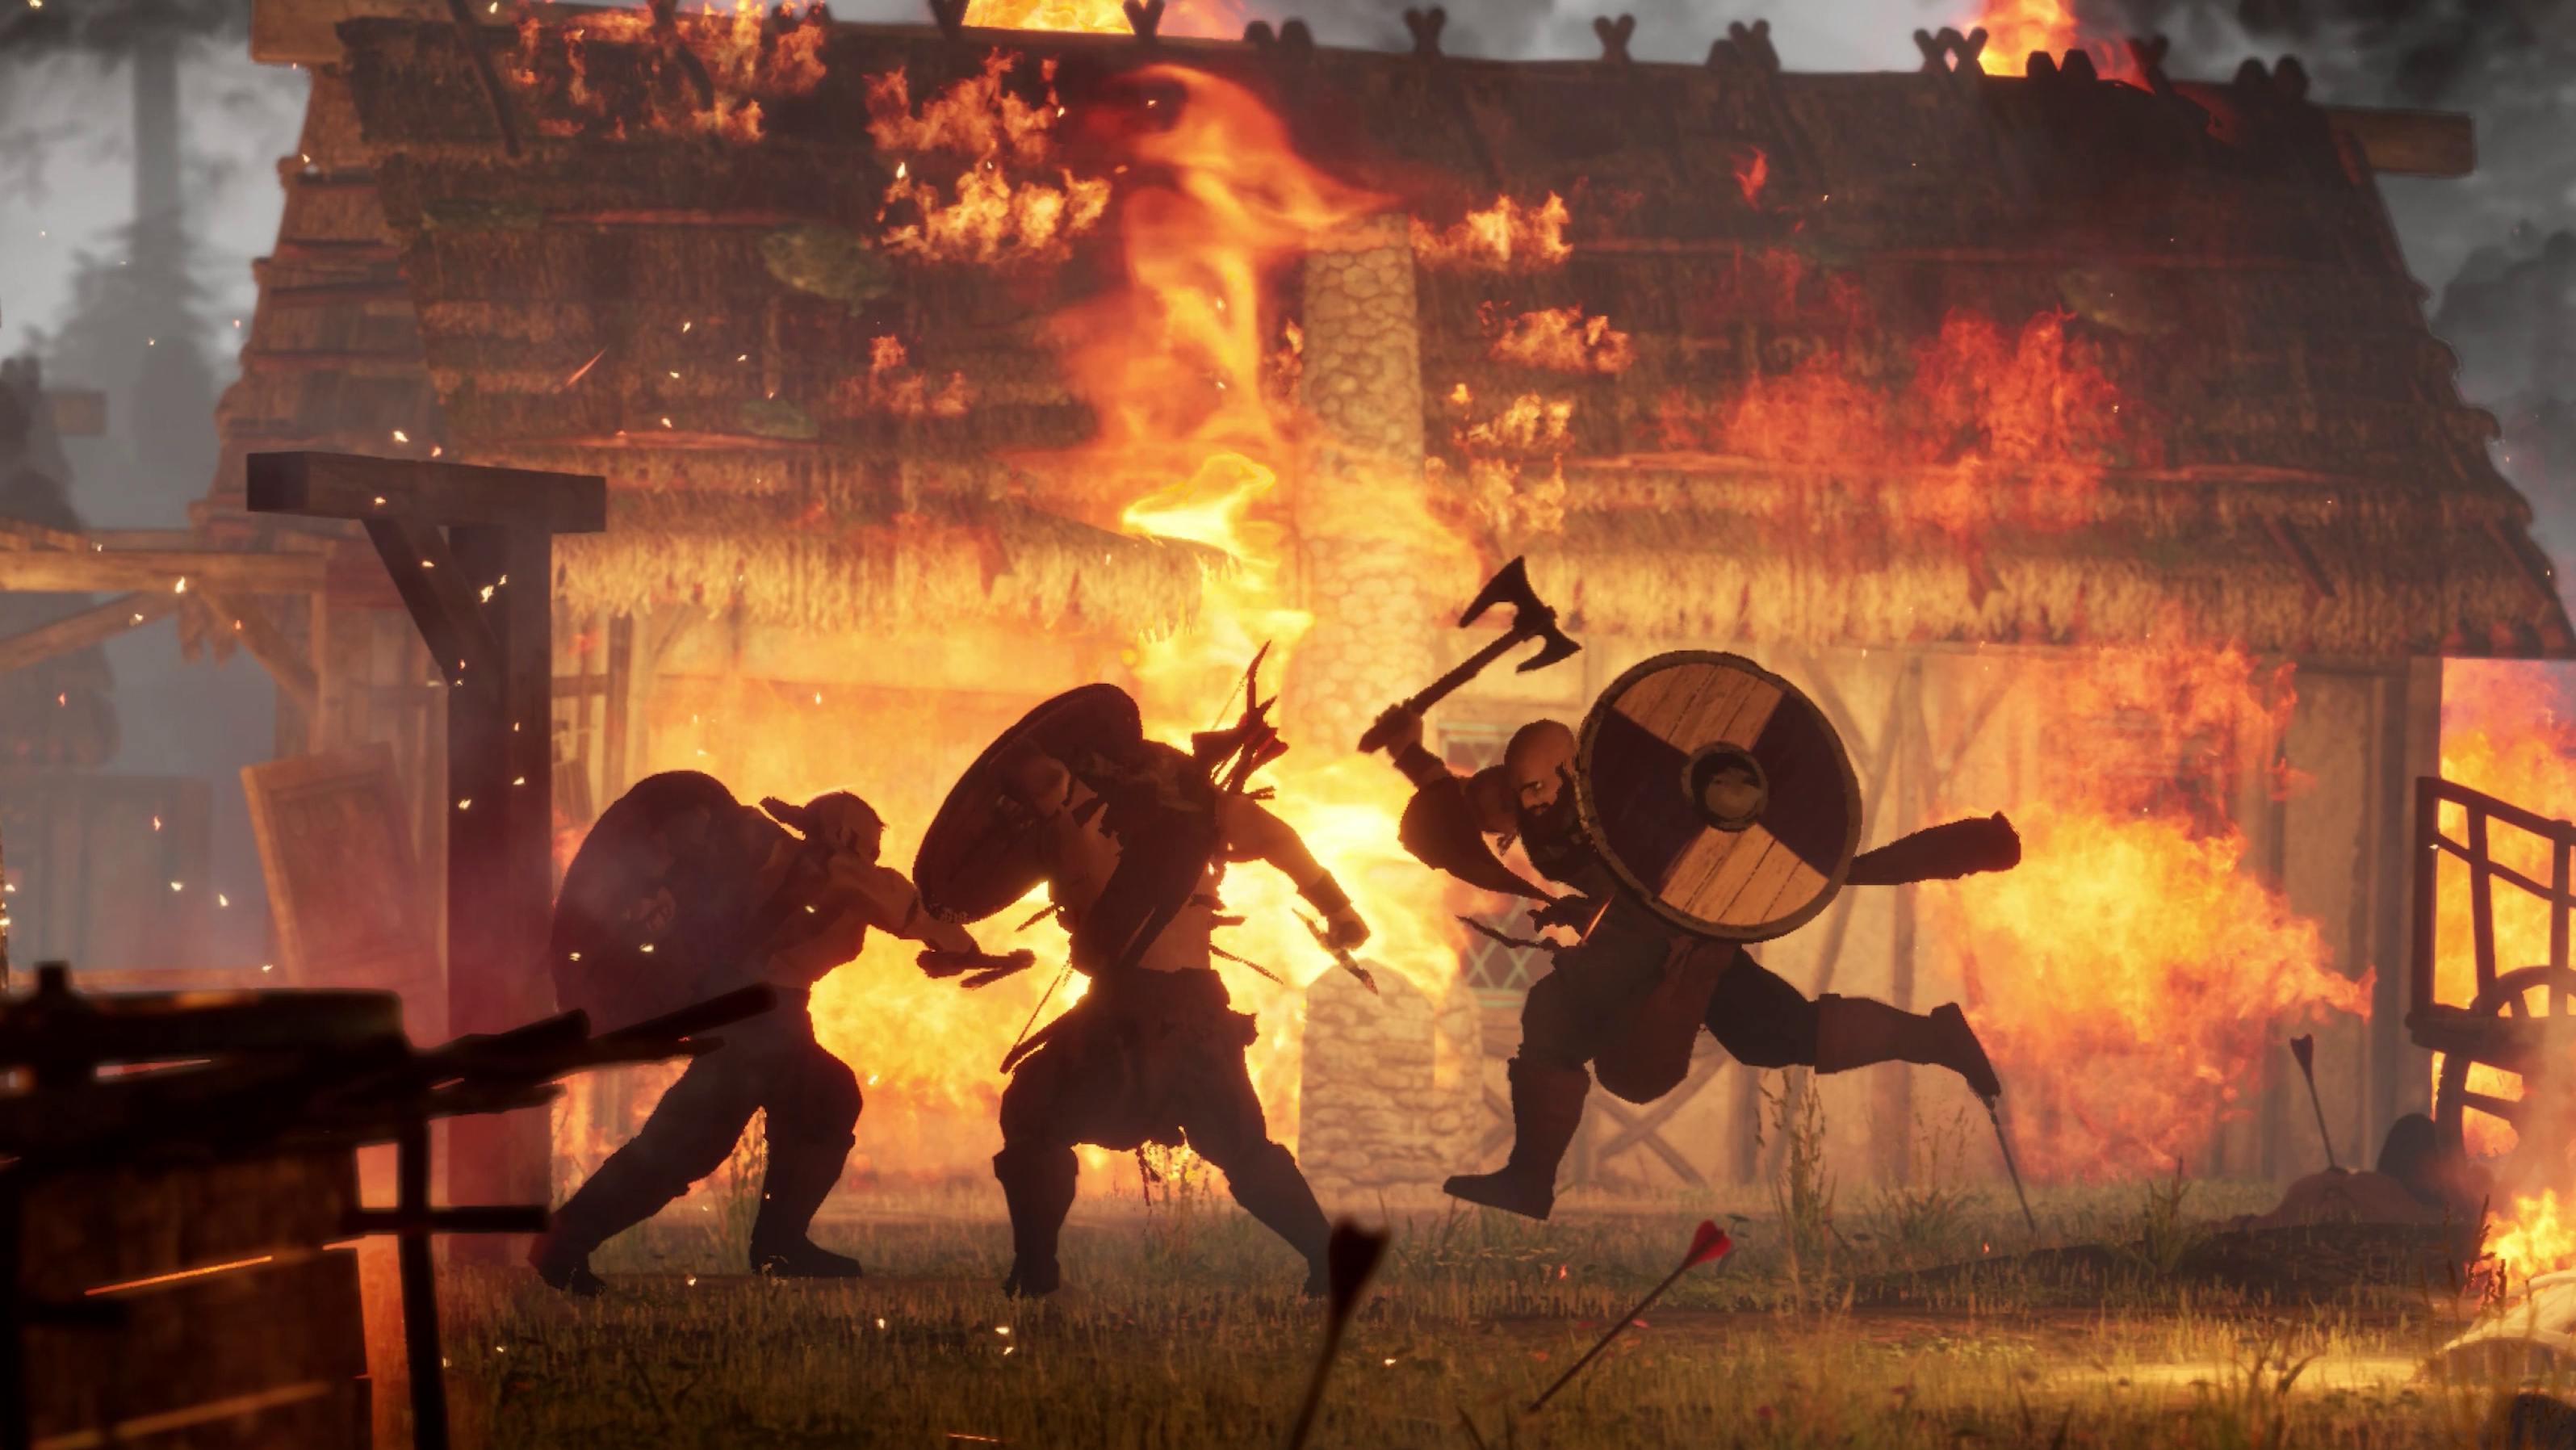  There's bone-crunching combat and flying kicks in this side-scrolling Viking revenge saga 